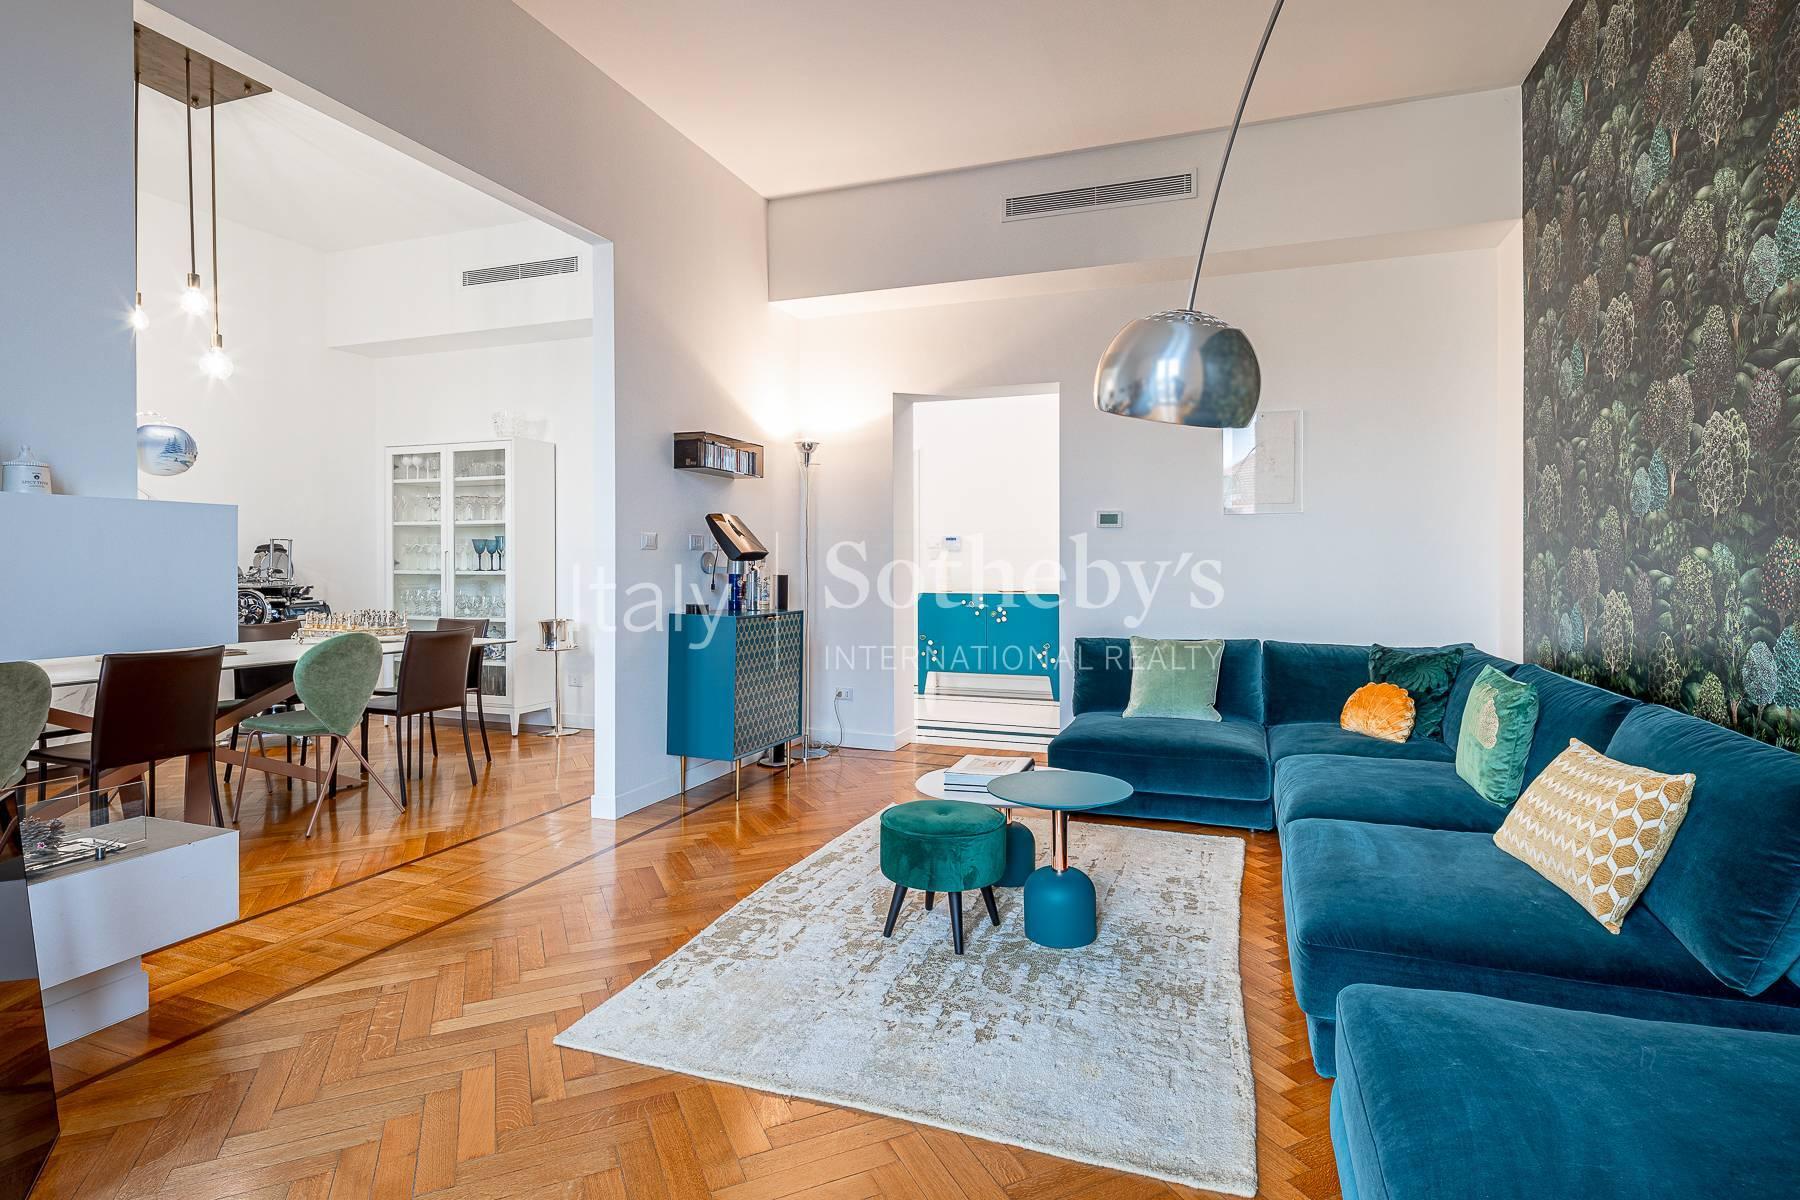 Superb furnished apartment in the Bianca di Savoia / Quadronno area - 5